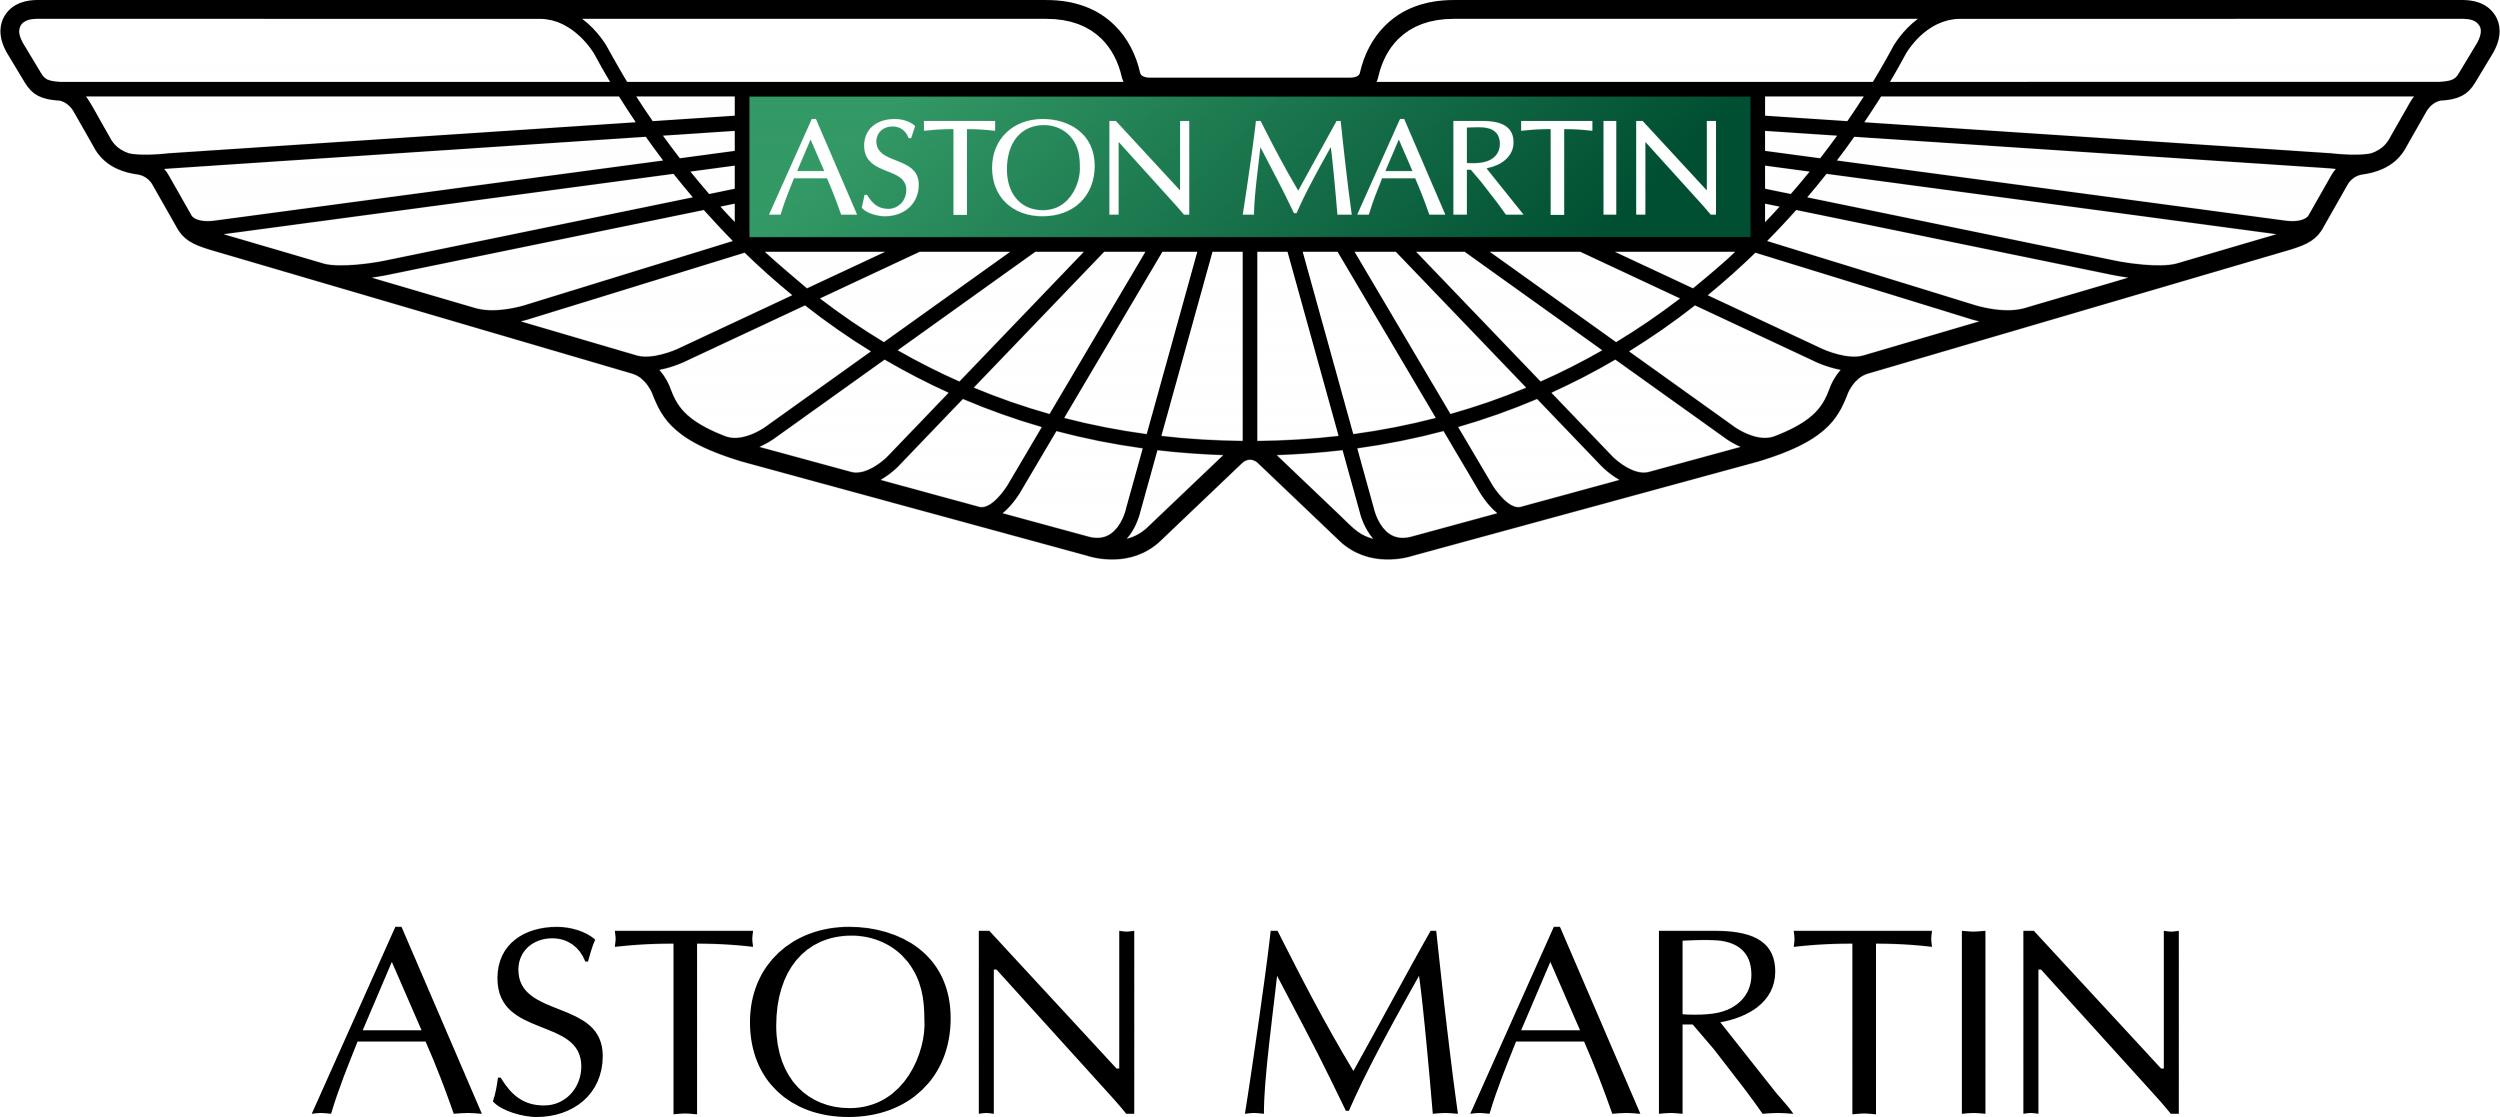 High Quality Aston Martin Blank Meme Template